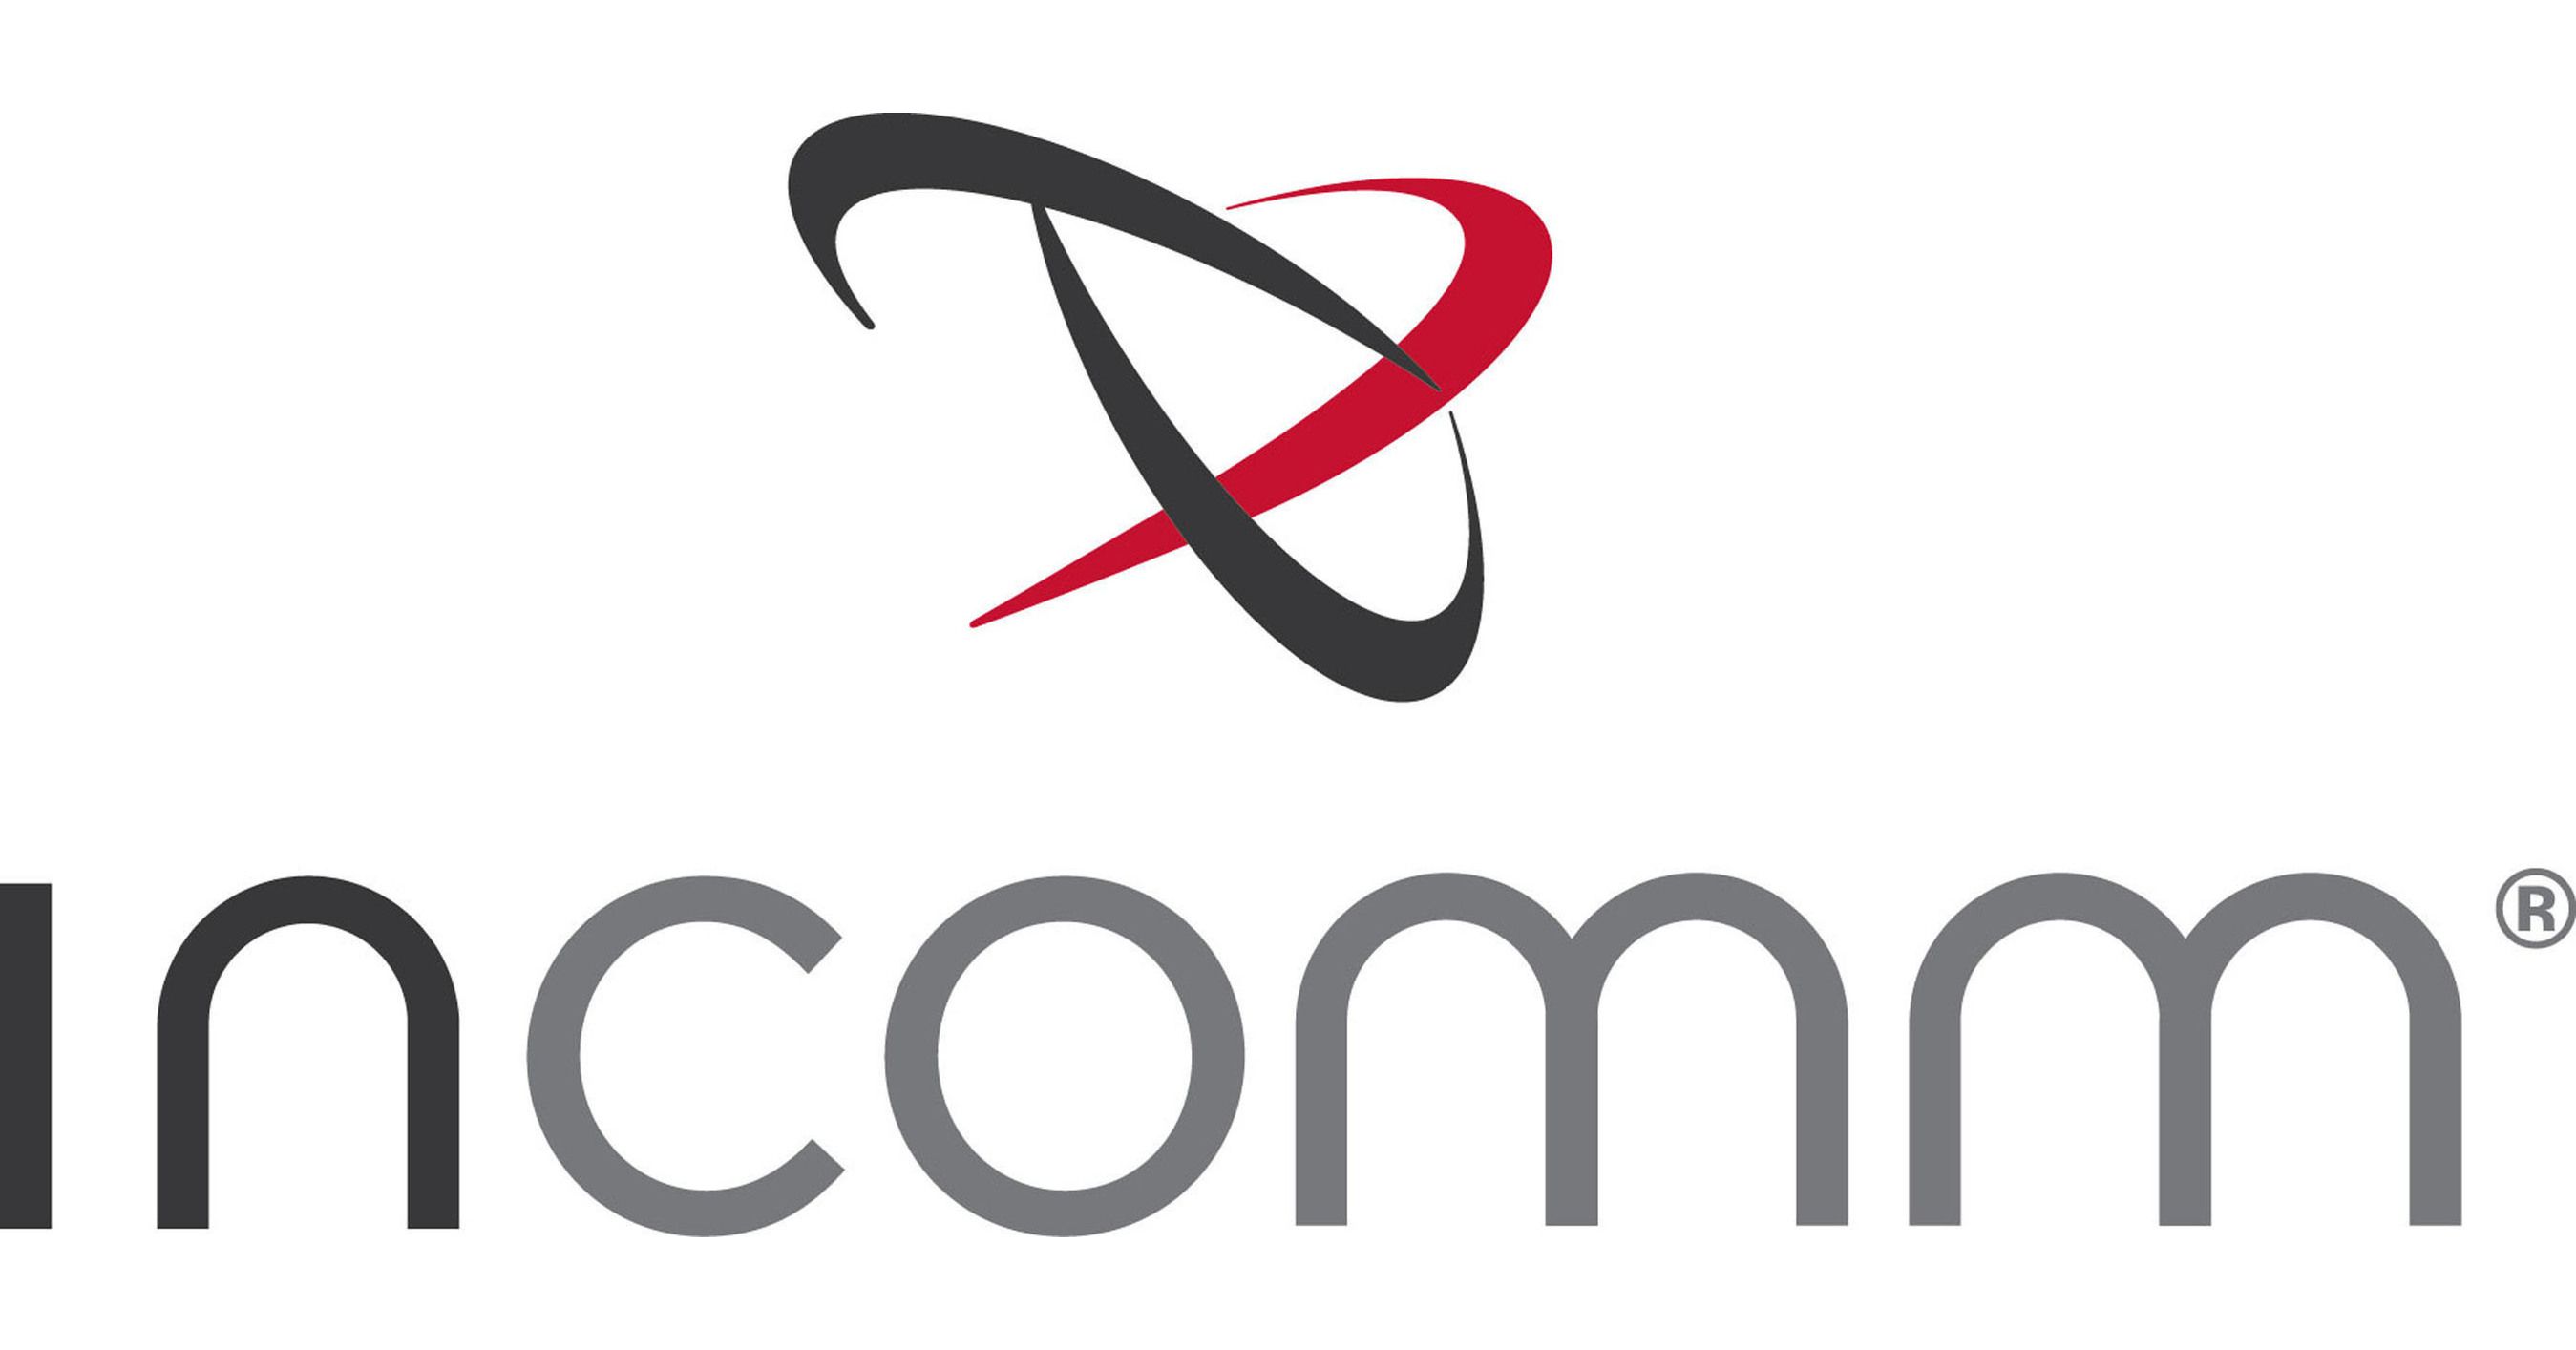 Incomm logo